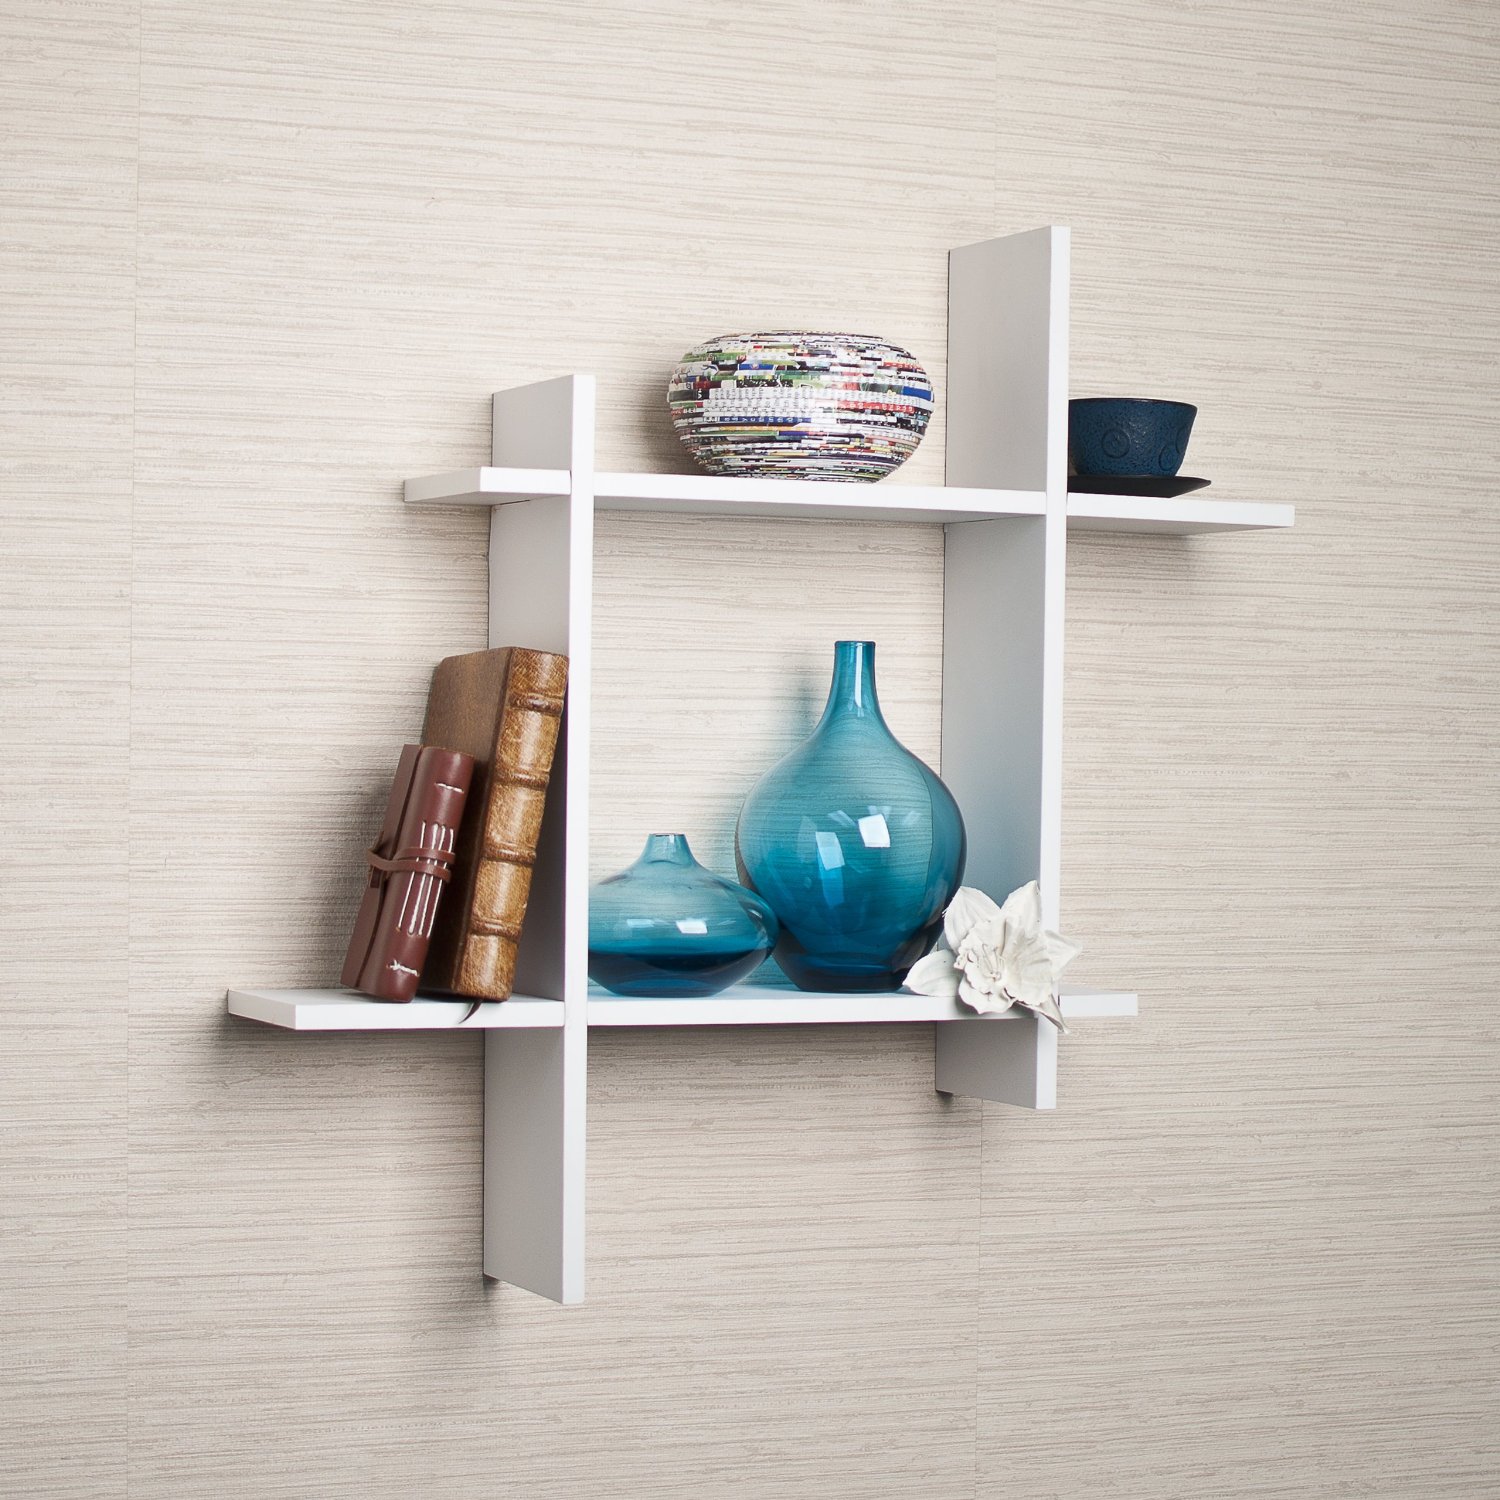 Floating Wall Shelves For Stylish Storage